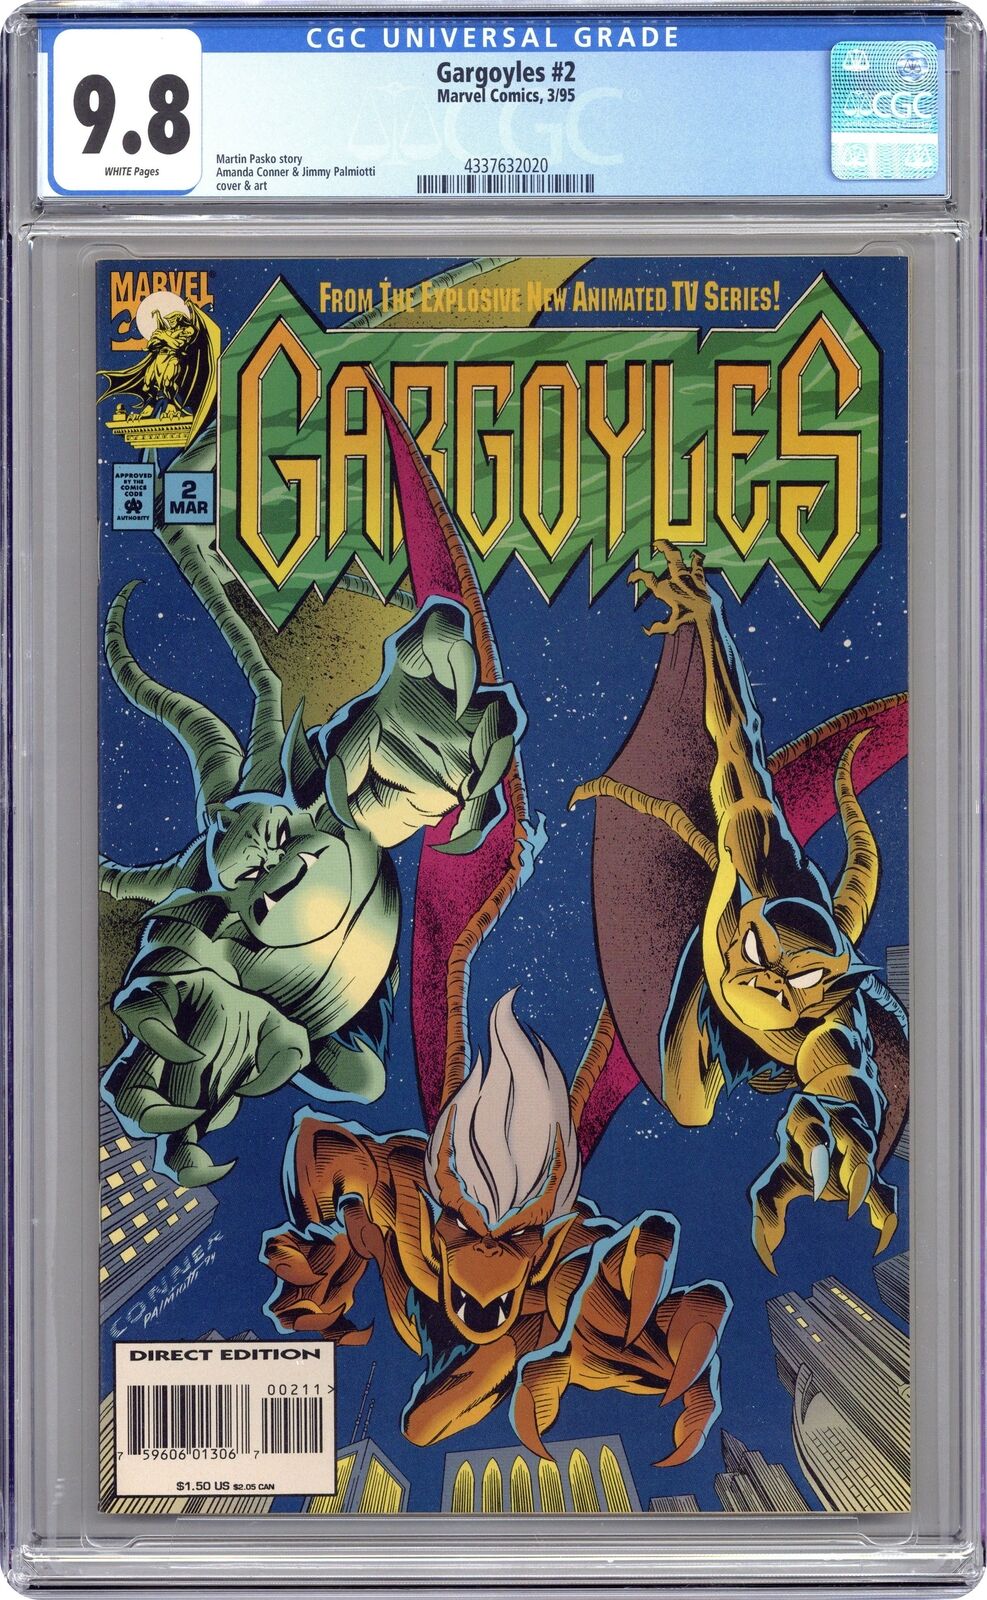 Gargoyles #2 CGC 9.8 1995 4337632020